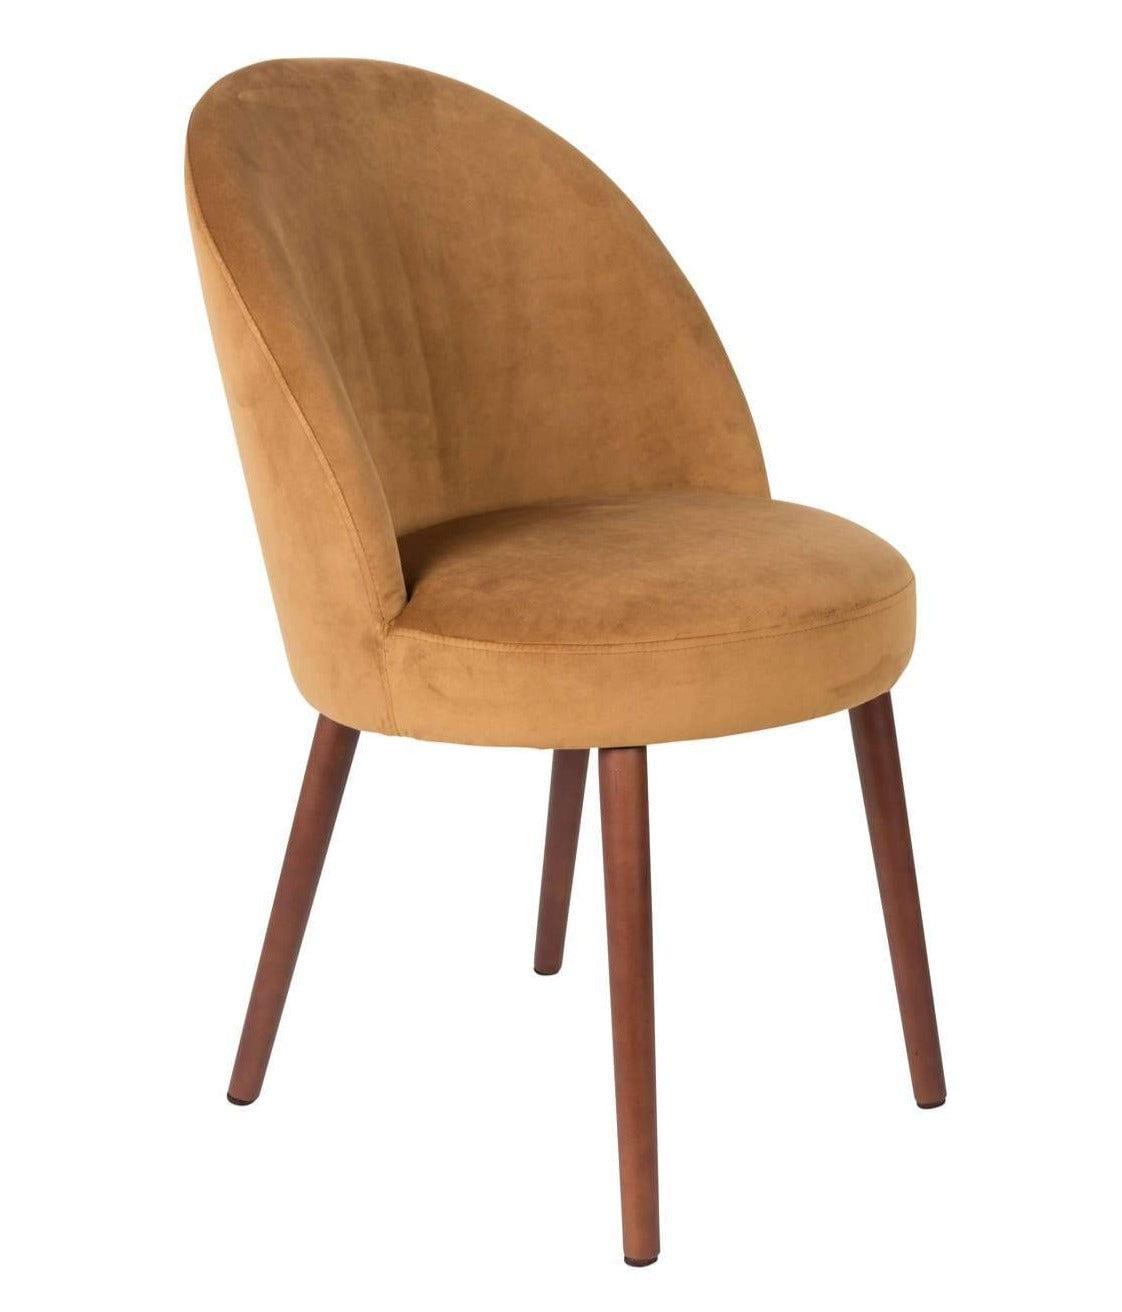 Krzesło BARBARA karmelowy Dutchbone    Eye on Design